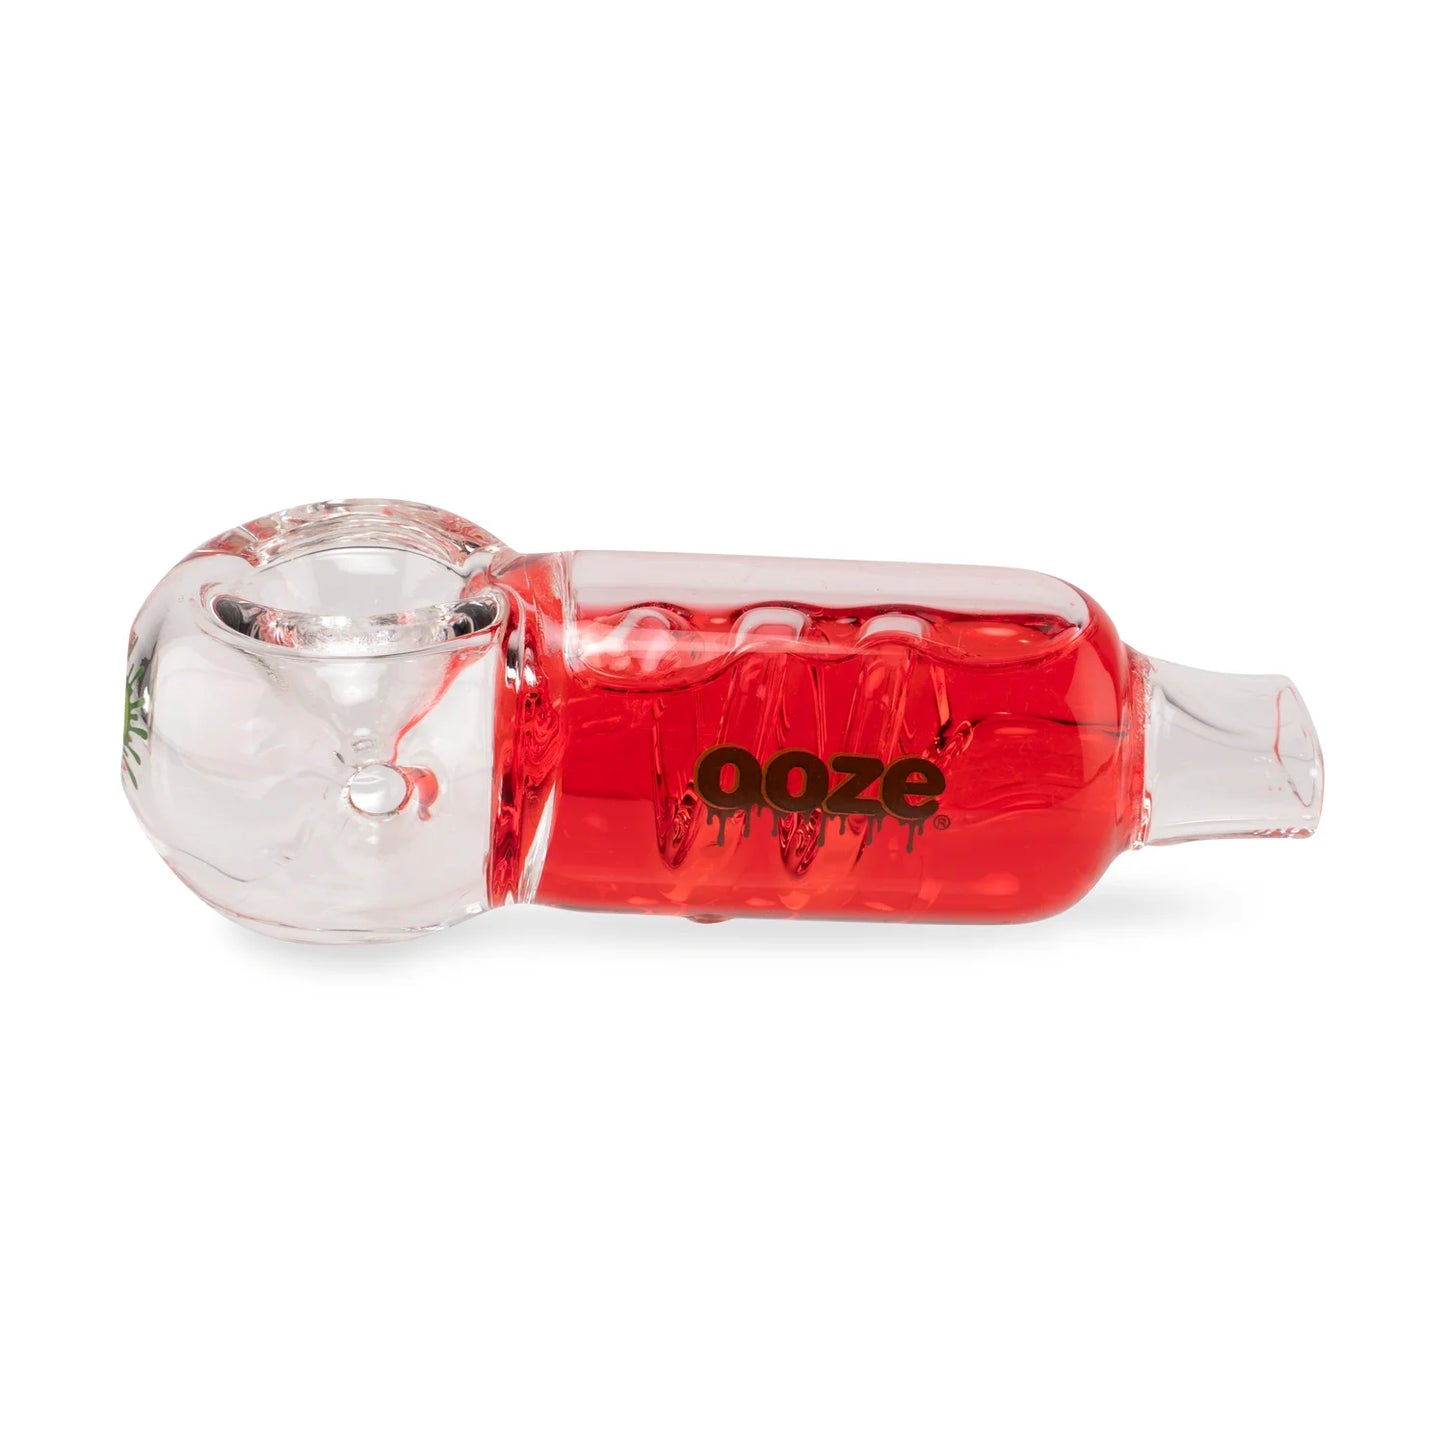 Ooze Cryo Glycerin Glass Bowl - Freezable Red